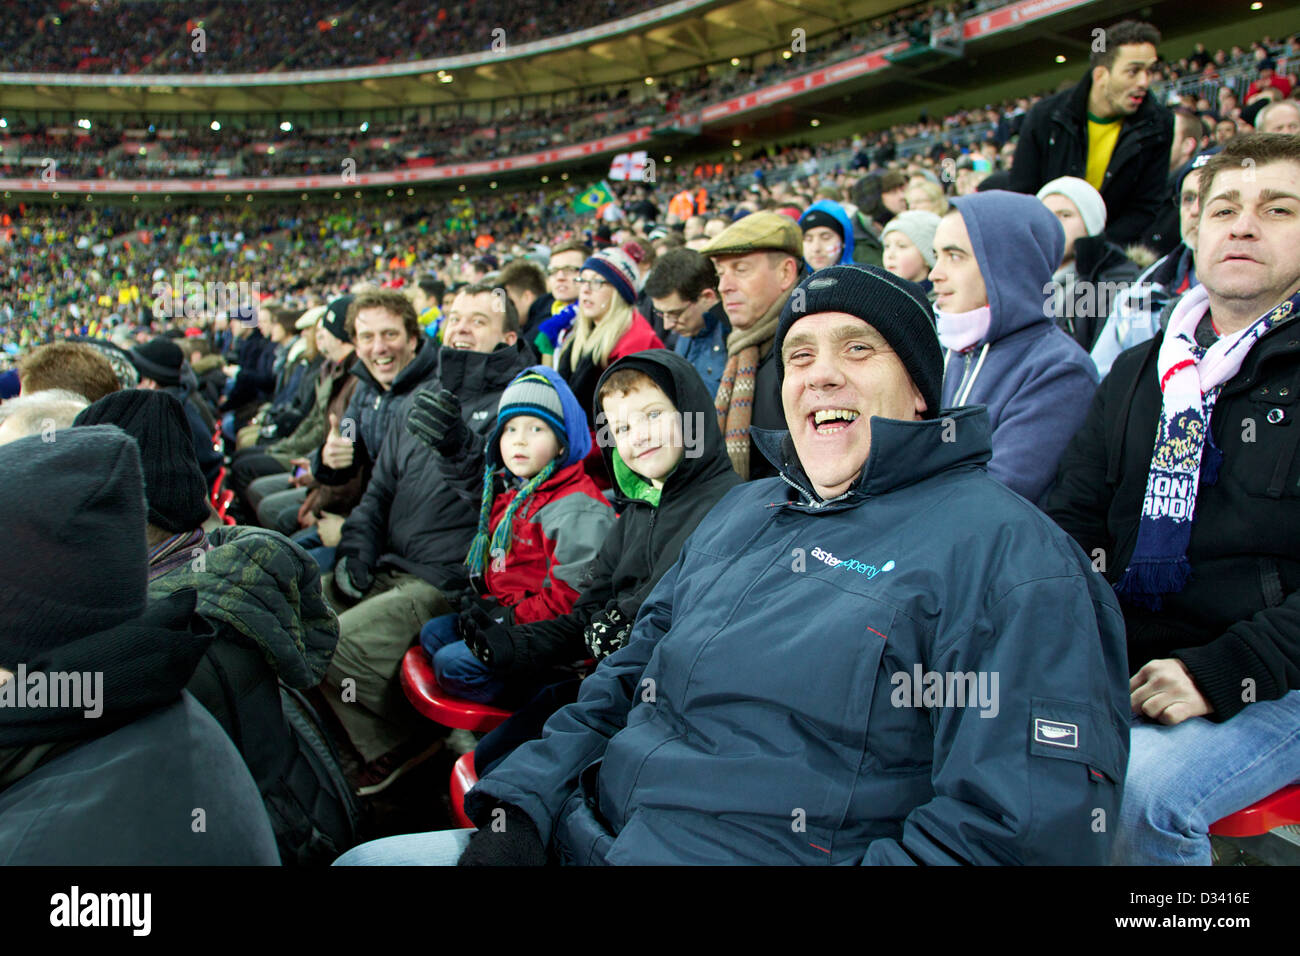 Crowd at England v Brazil football game, Wembley Stadium, London, England, UK. Wednesday 6th February 2013 Stock Photo